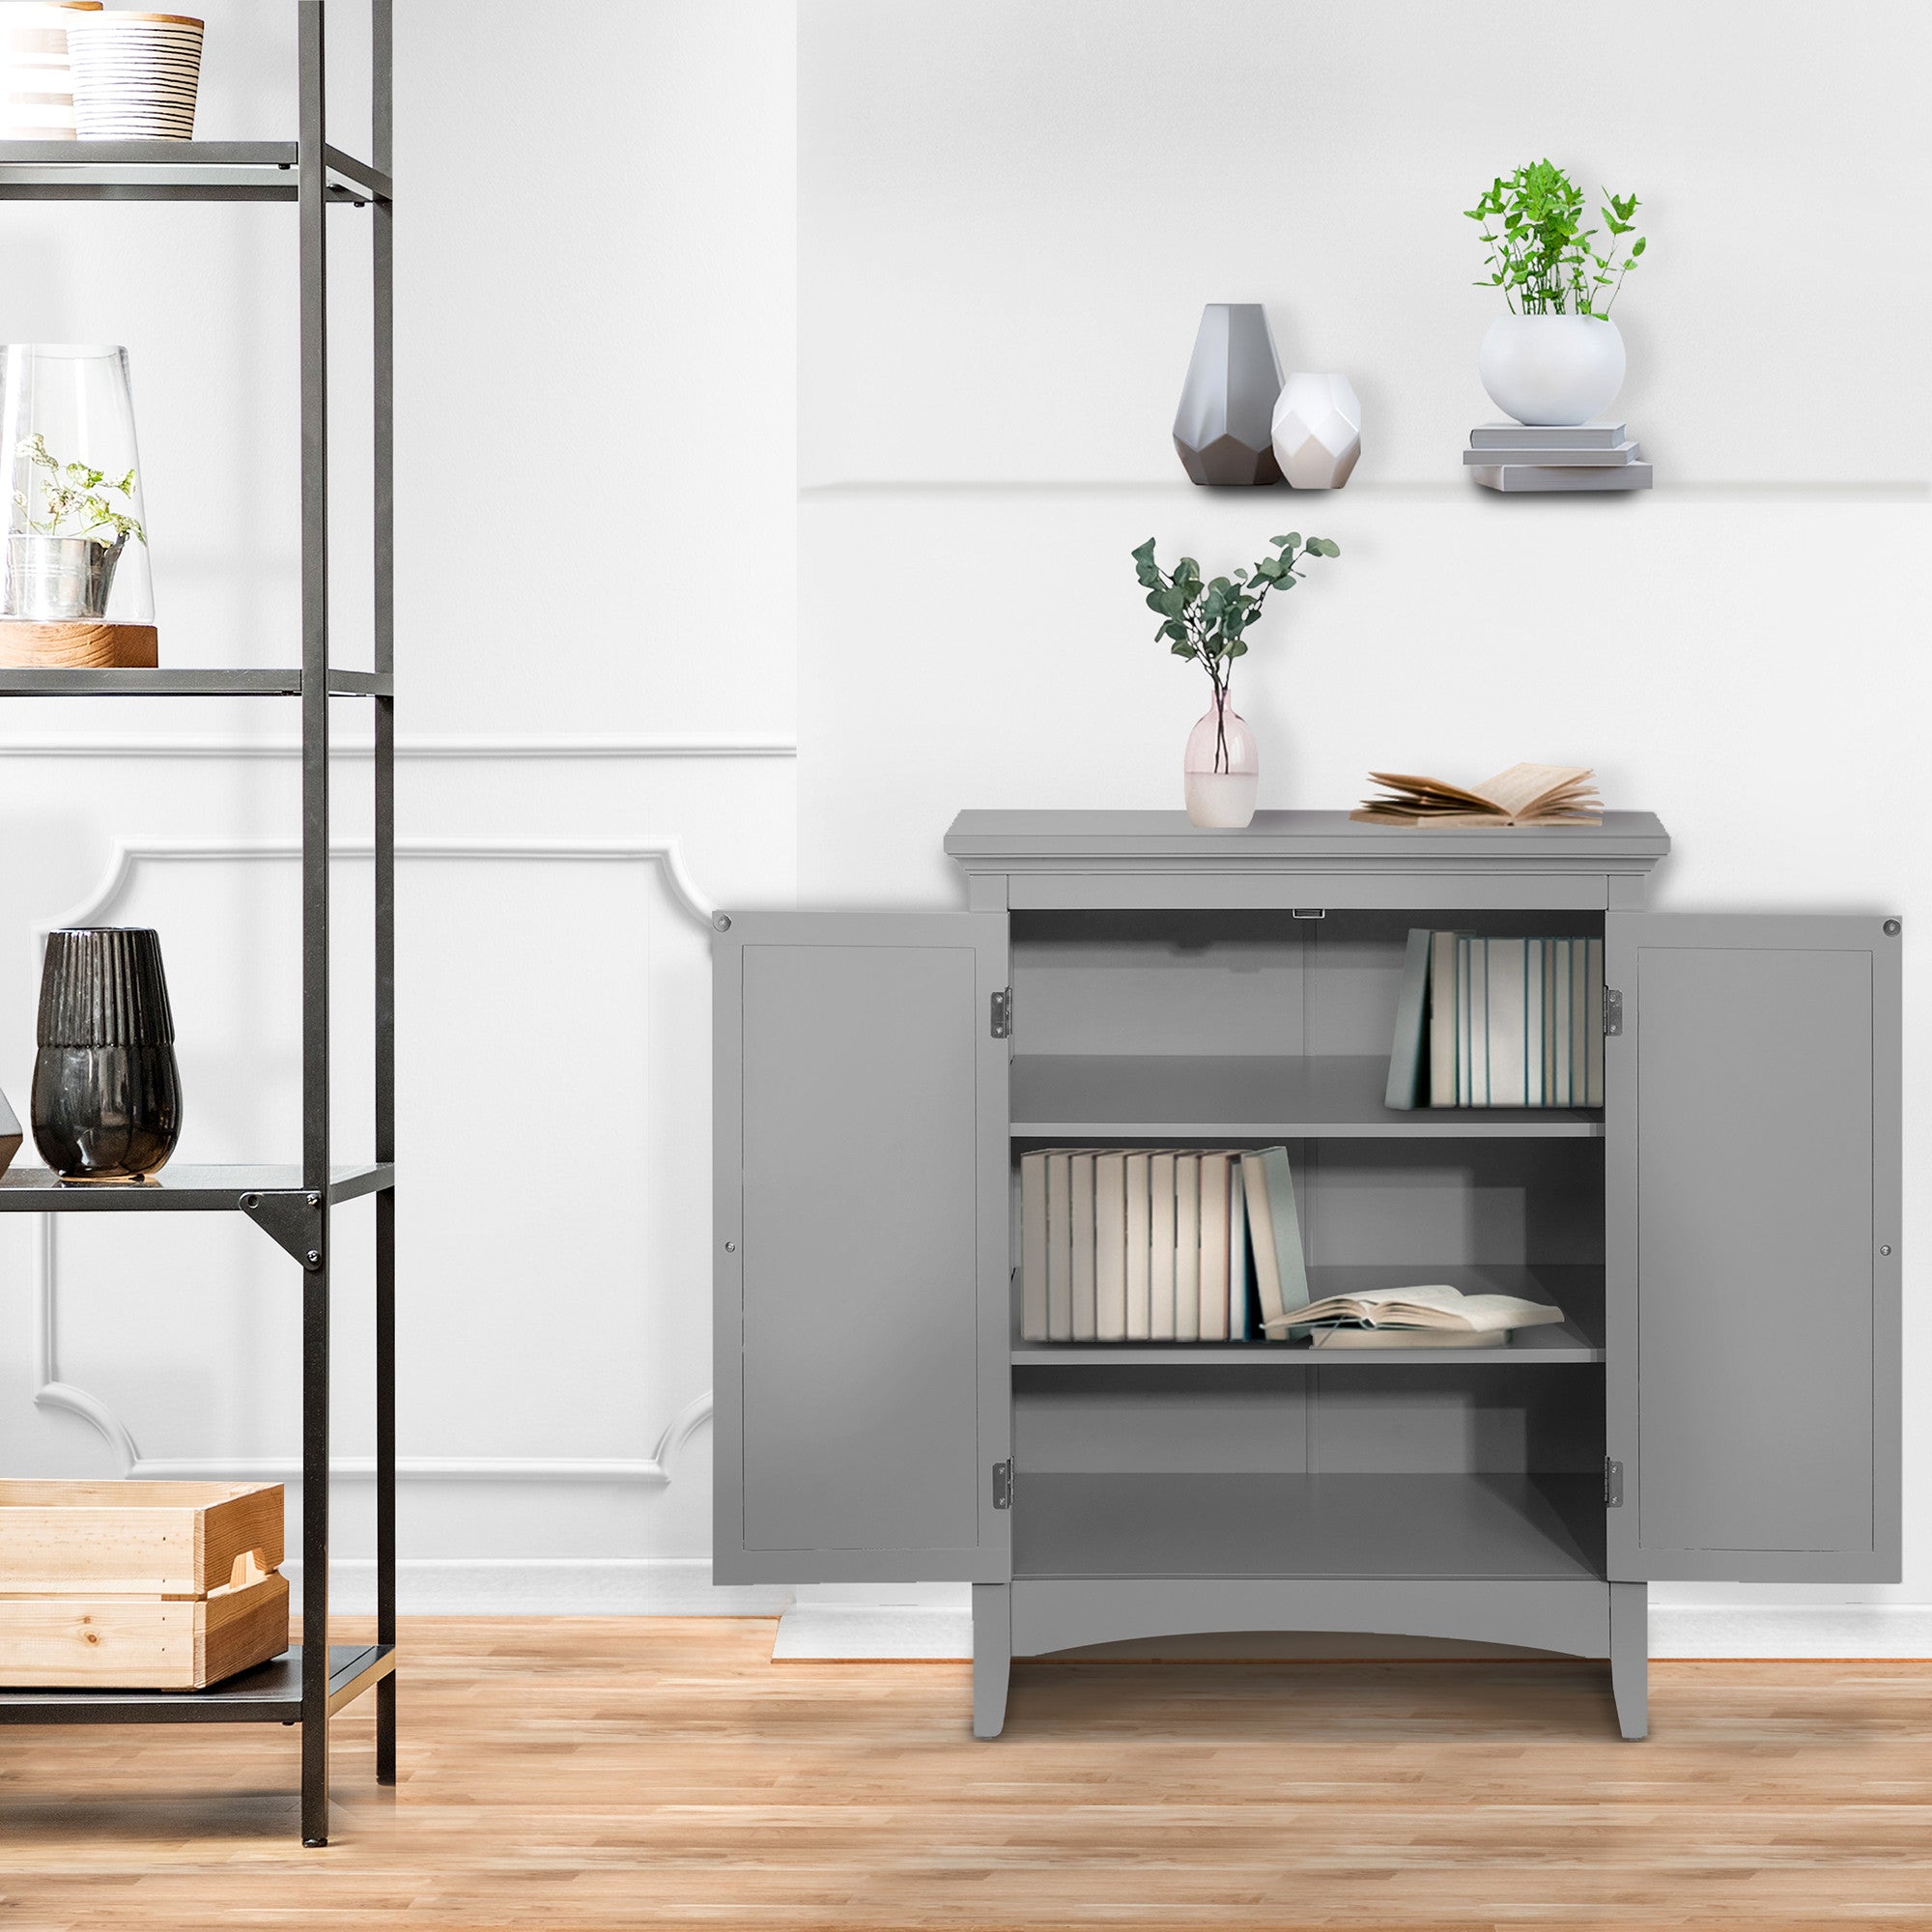 Teamson Home Glancy Wooden Floor Cabinet with Shutter Doors and Adjustable Shelves, Gray